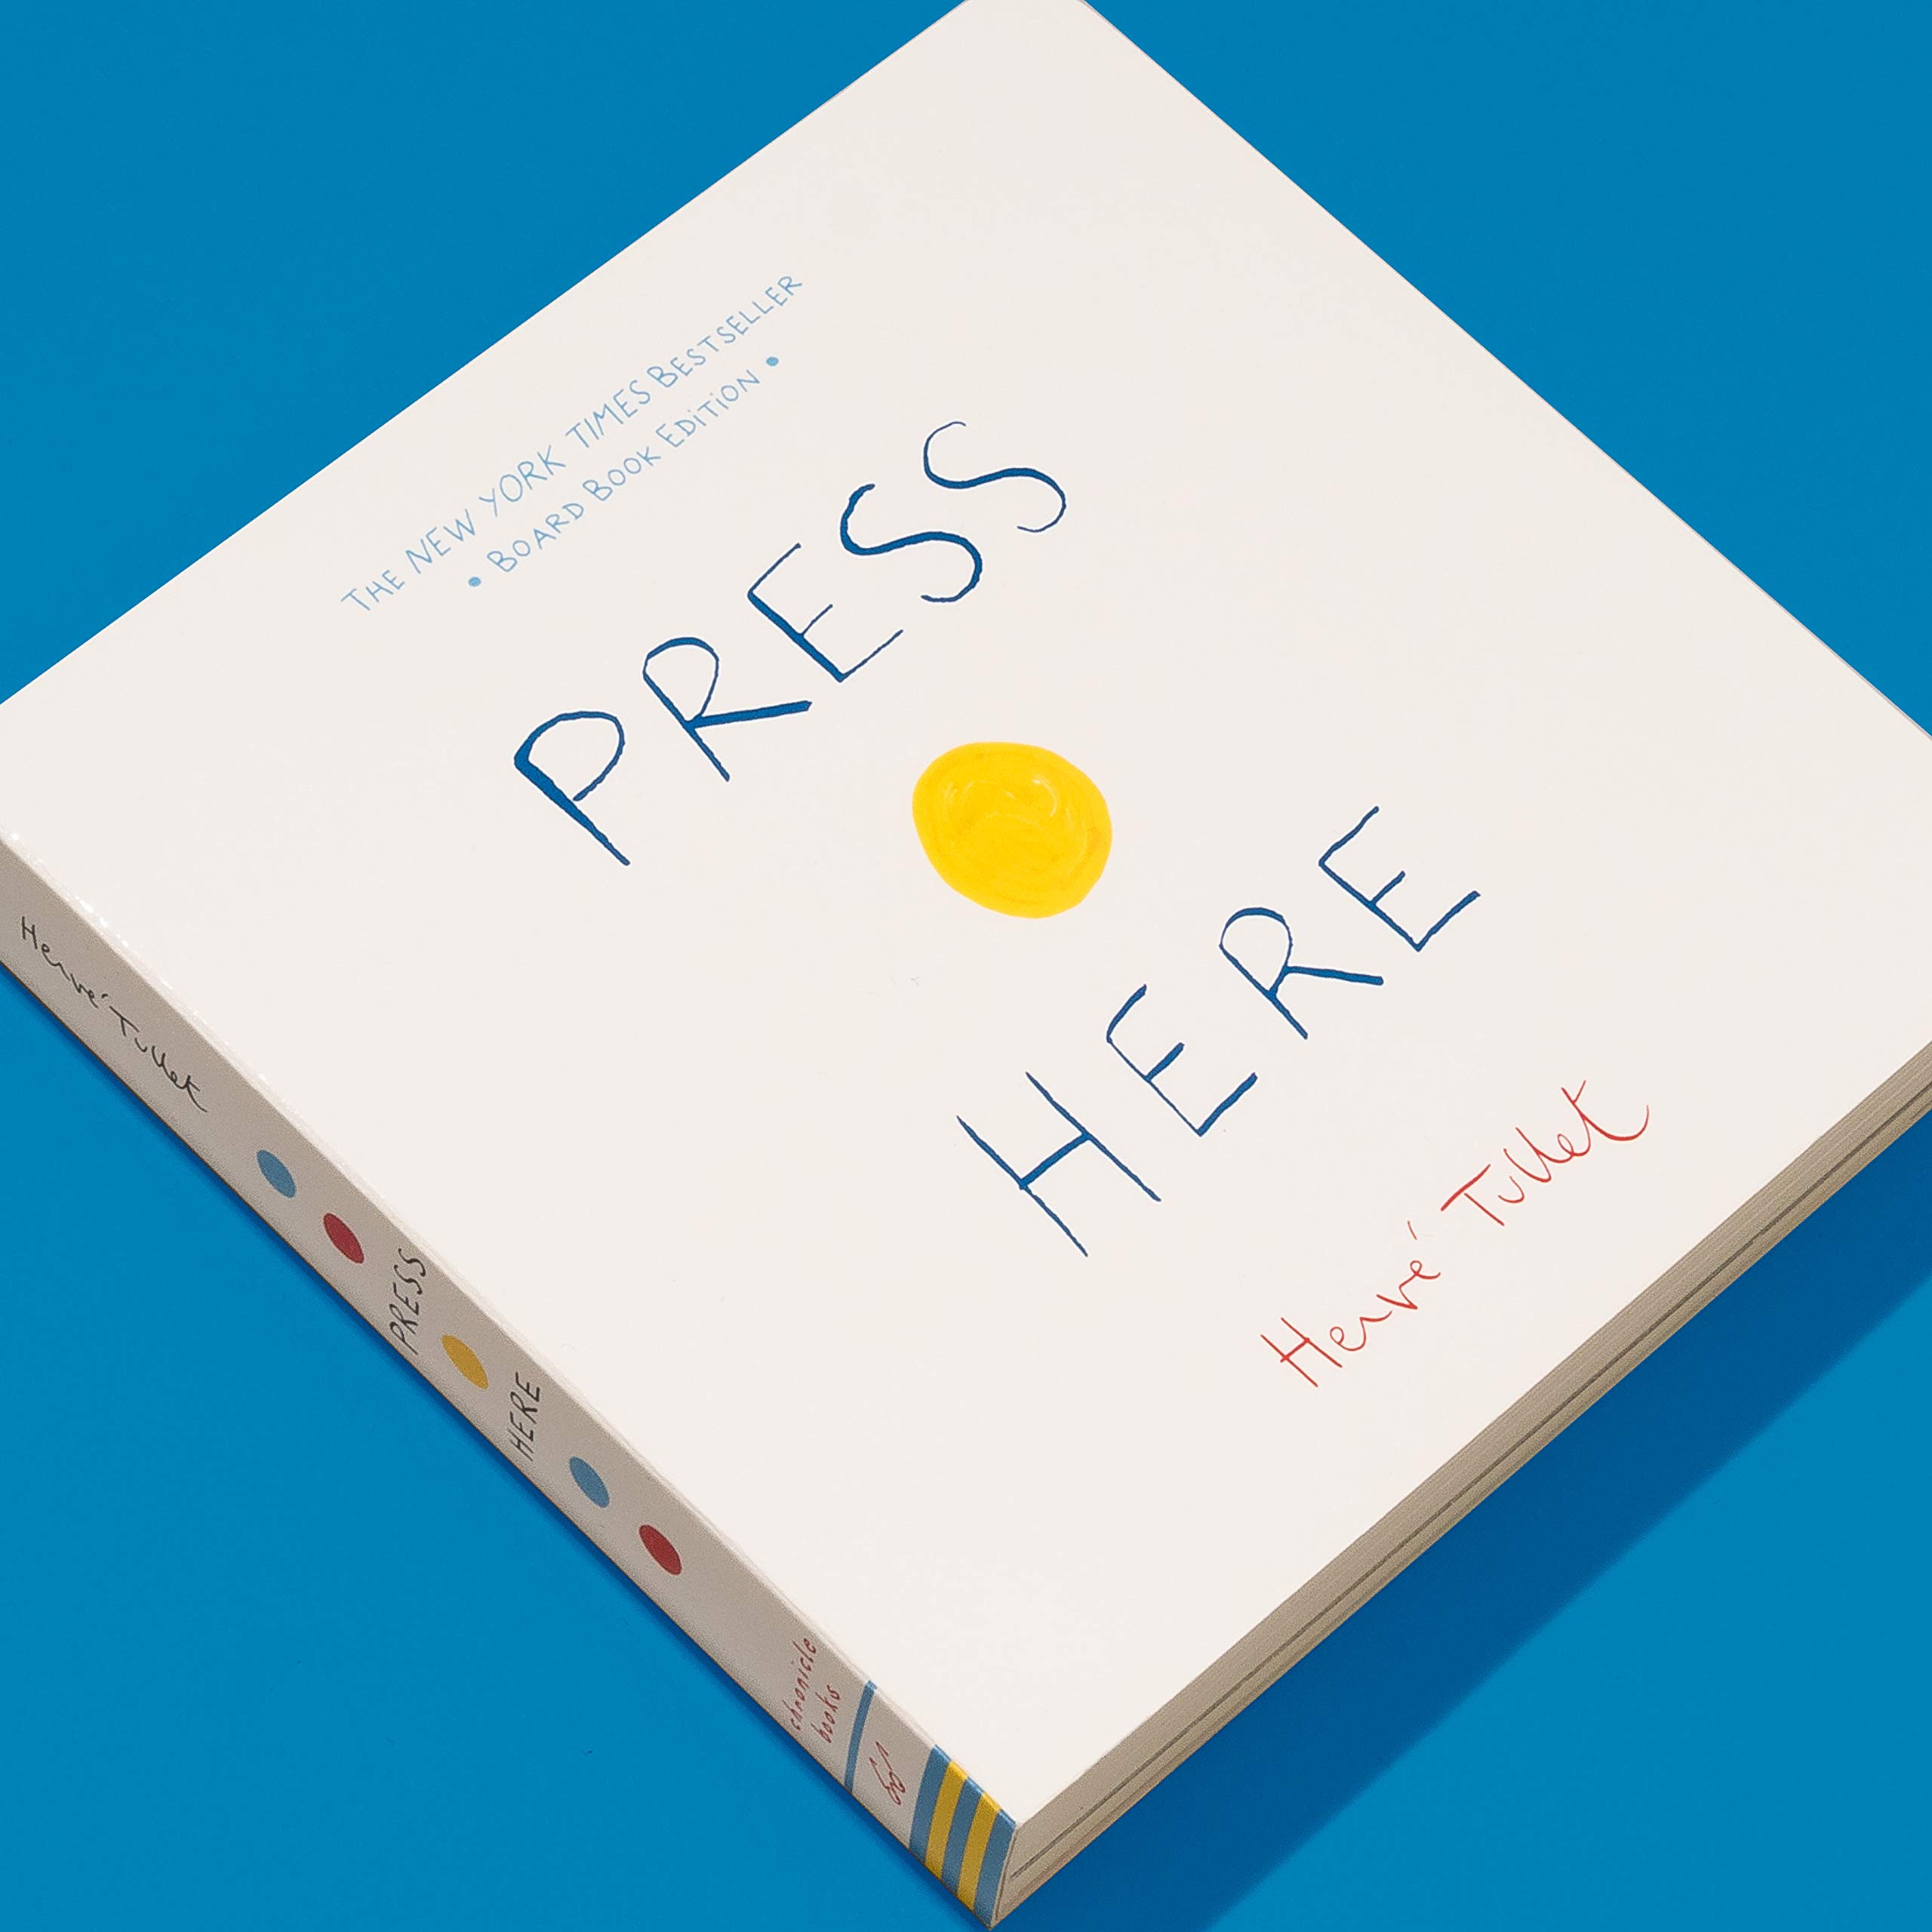 Press Here (Herve Tullet)